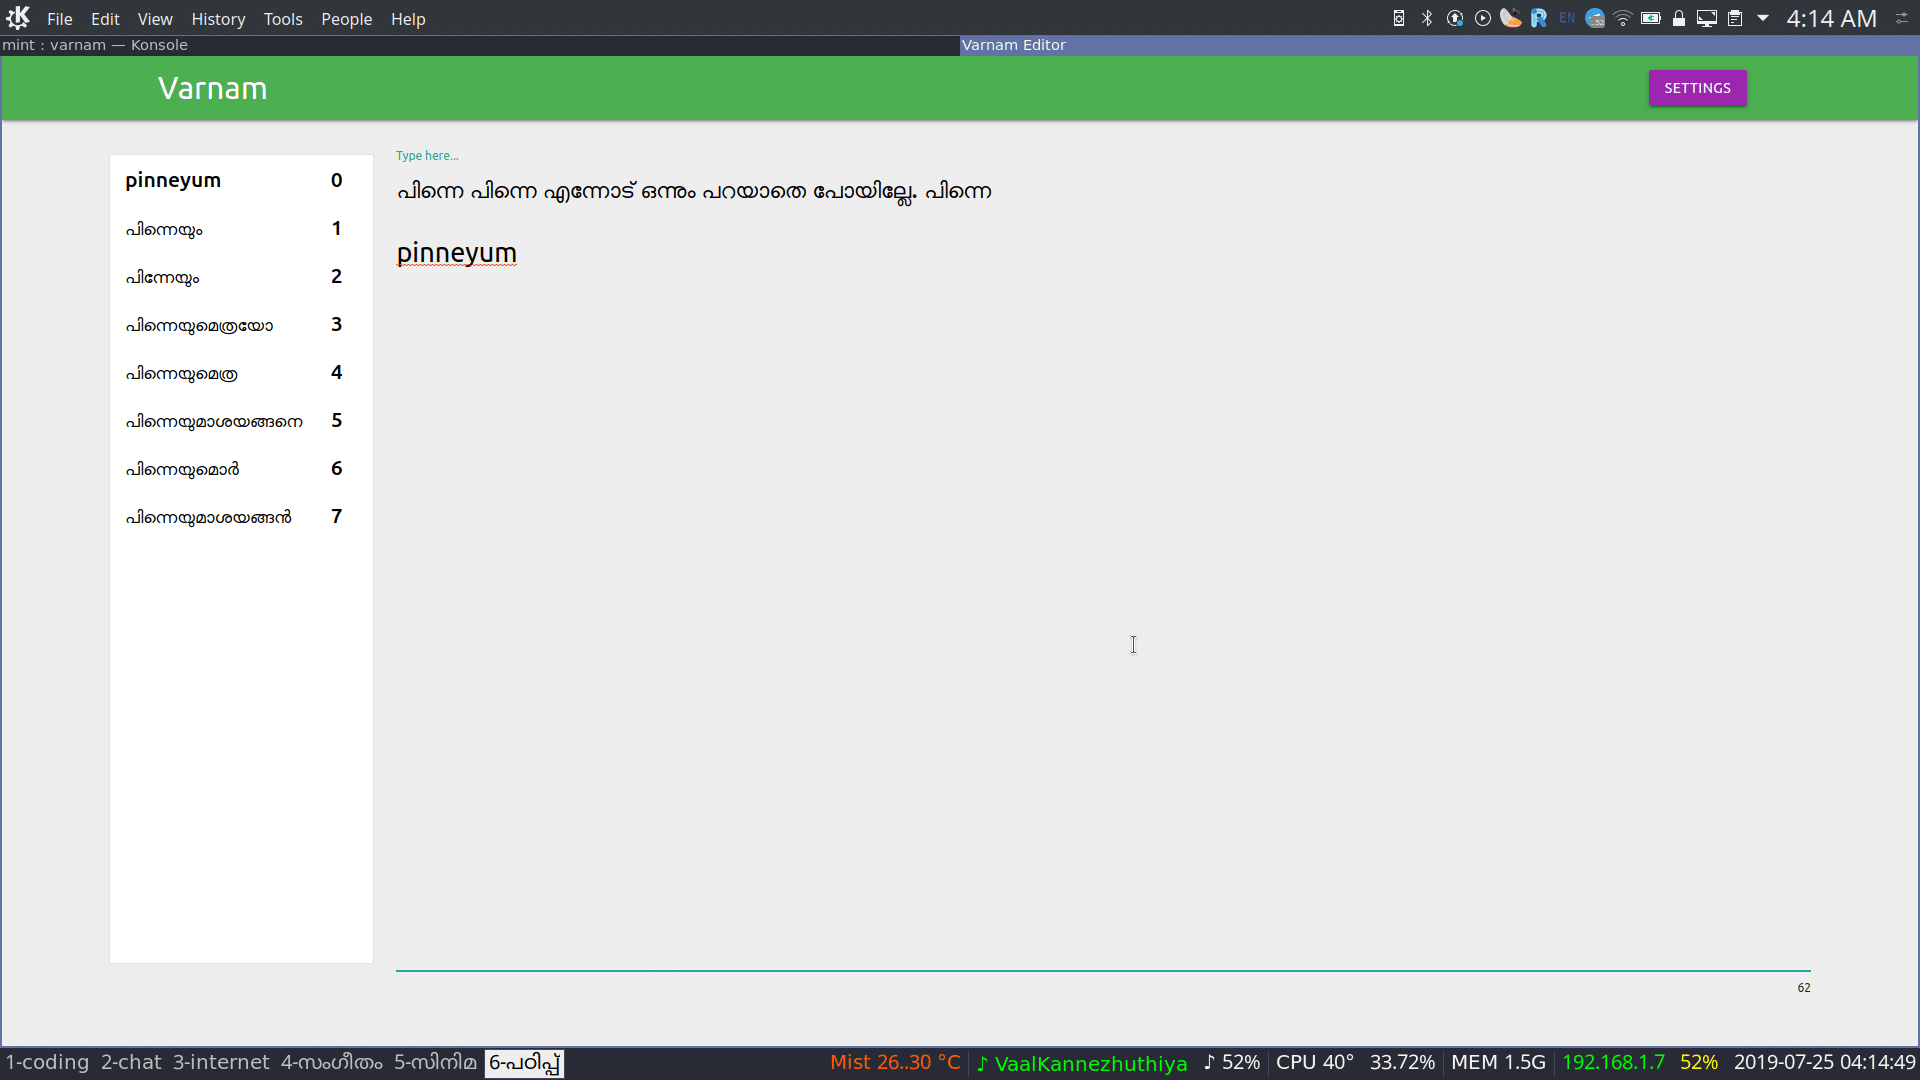 como-instalar-o-varnam-editor-no-ubuntu-fedora-debian-e-opensuse